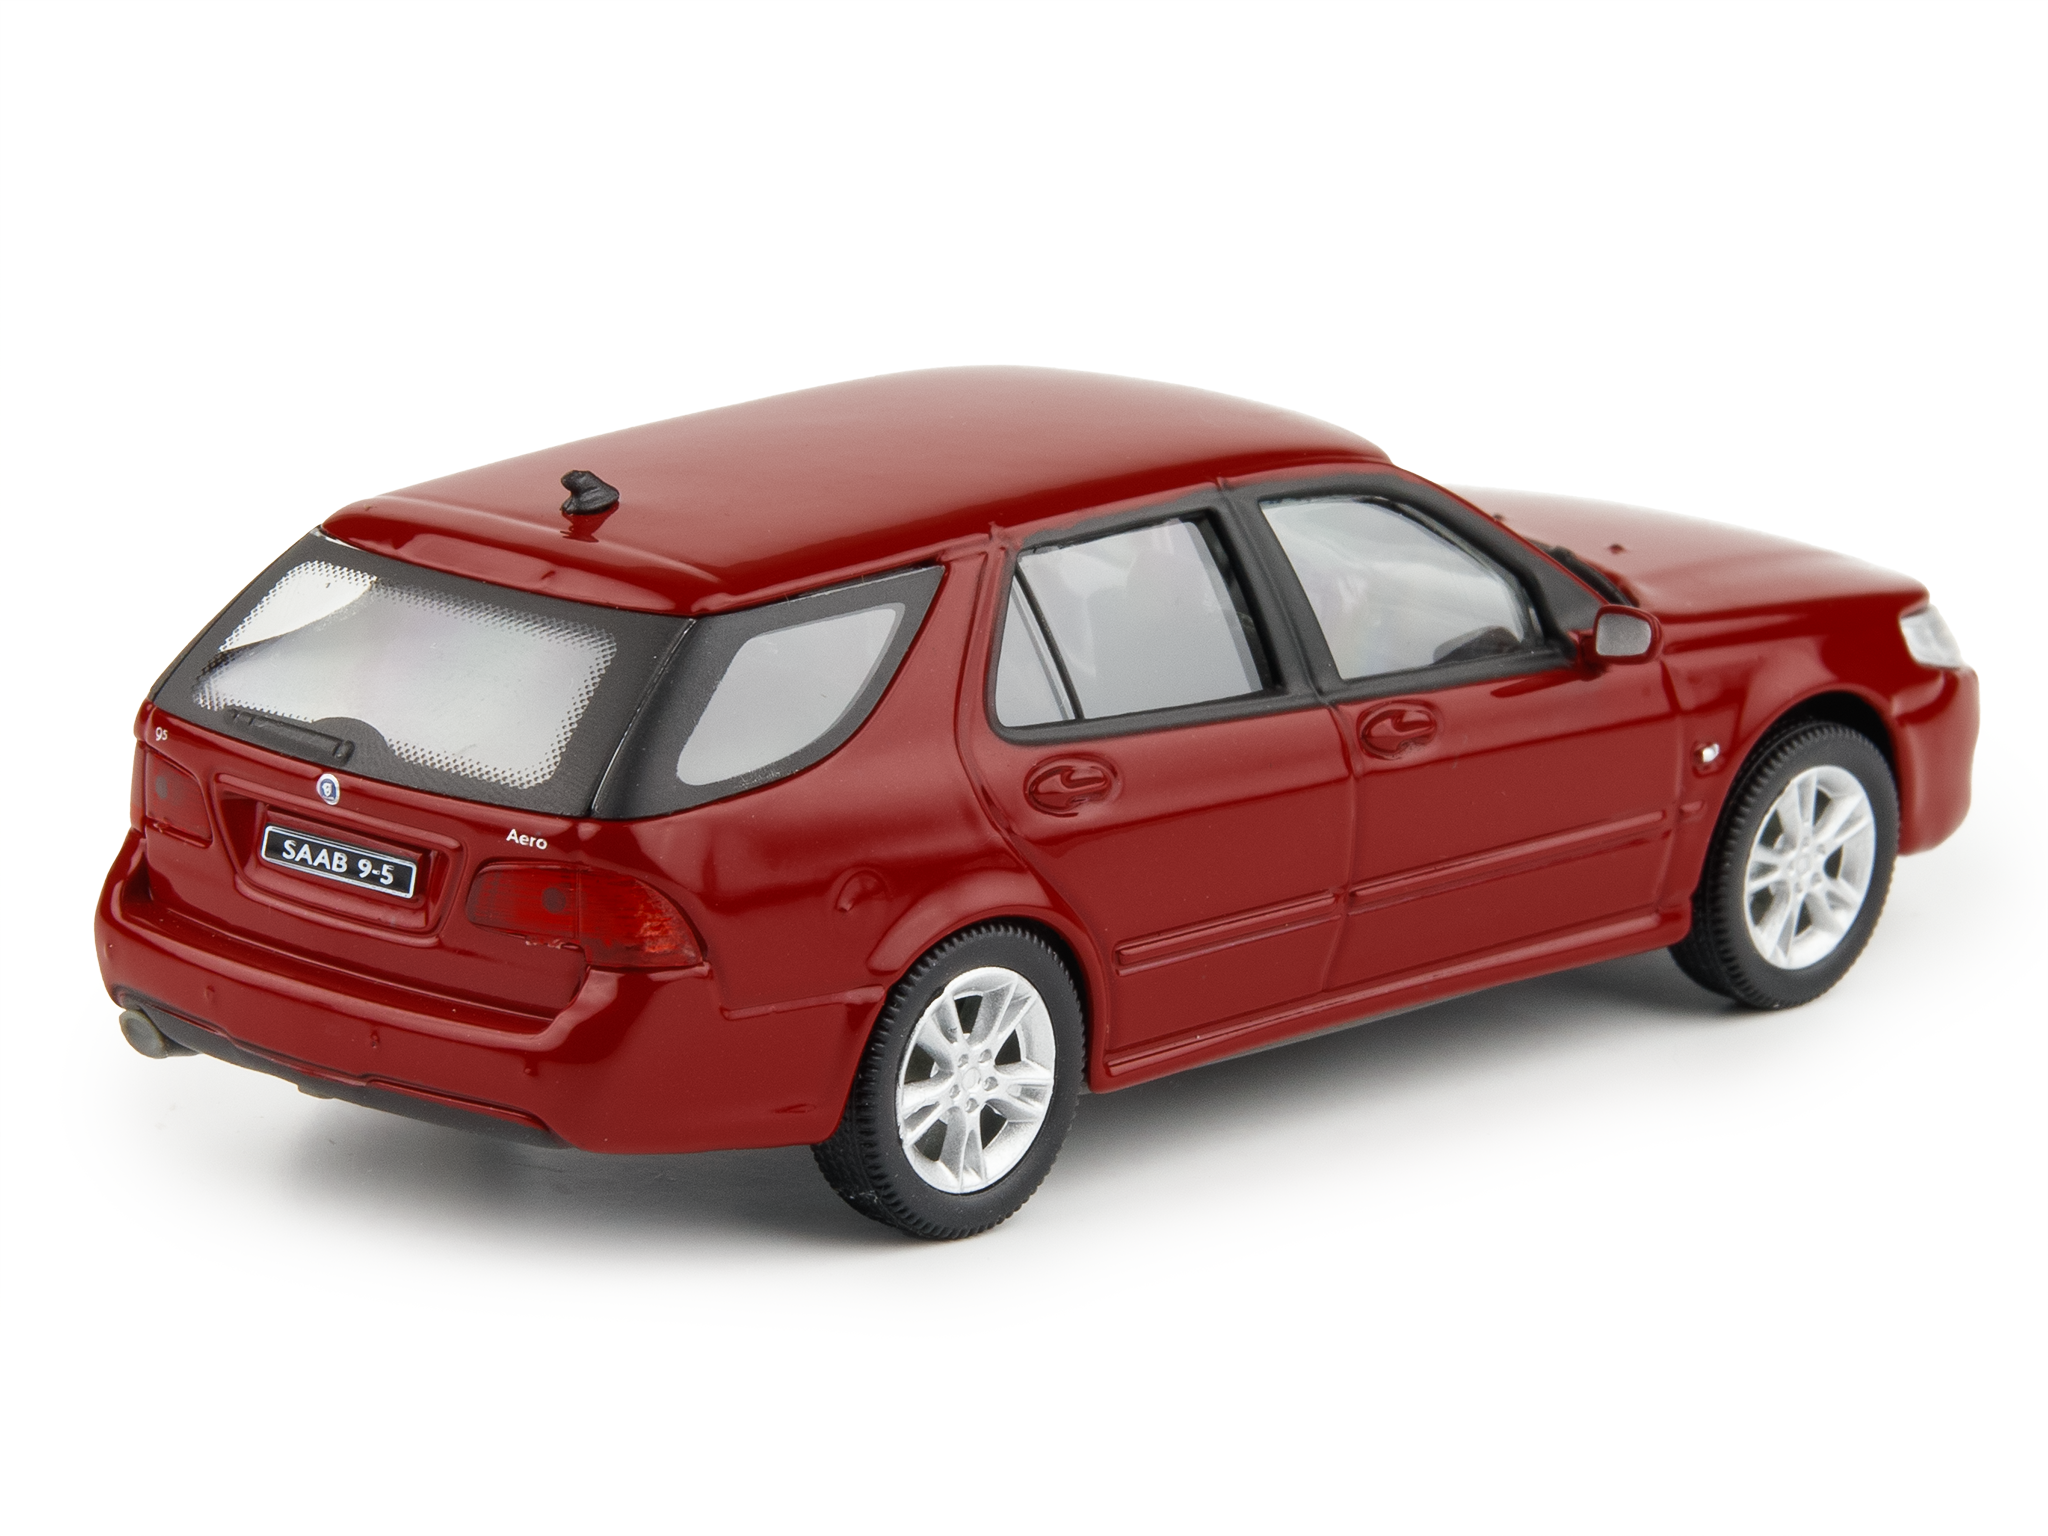 Saab 9.5 Estate 1998 red- 1:43 Scale Diecast Model Car